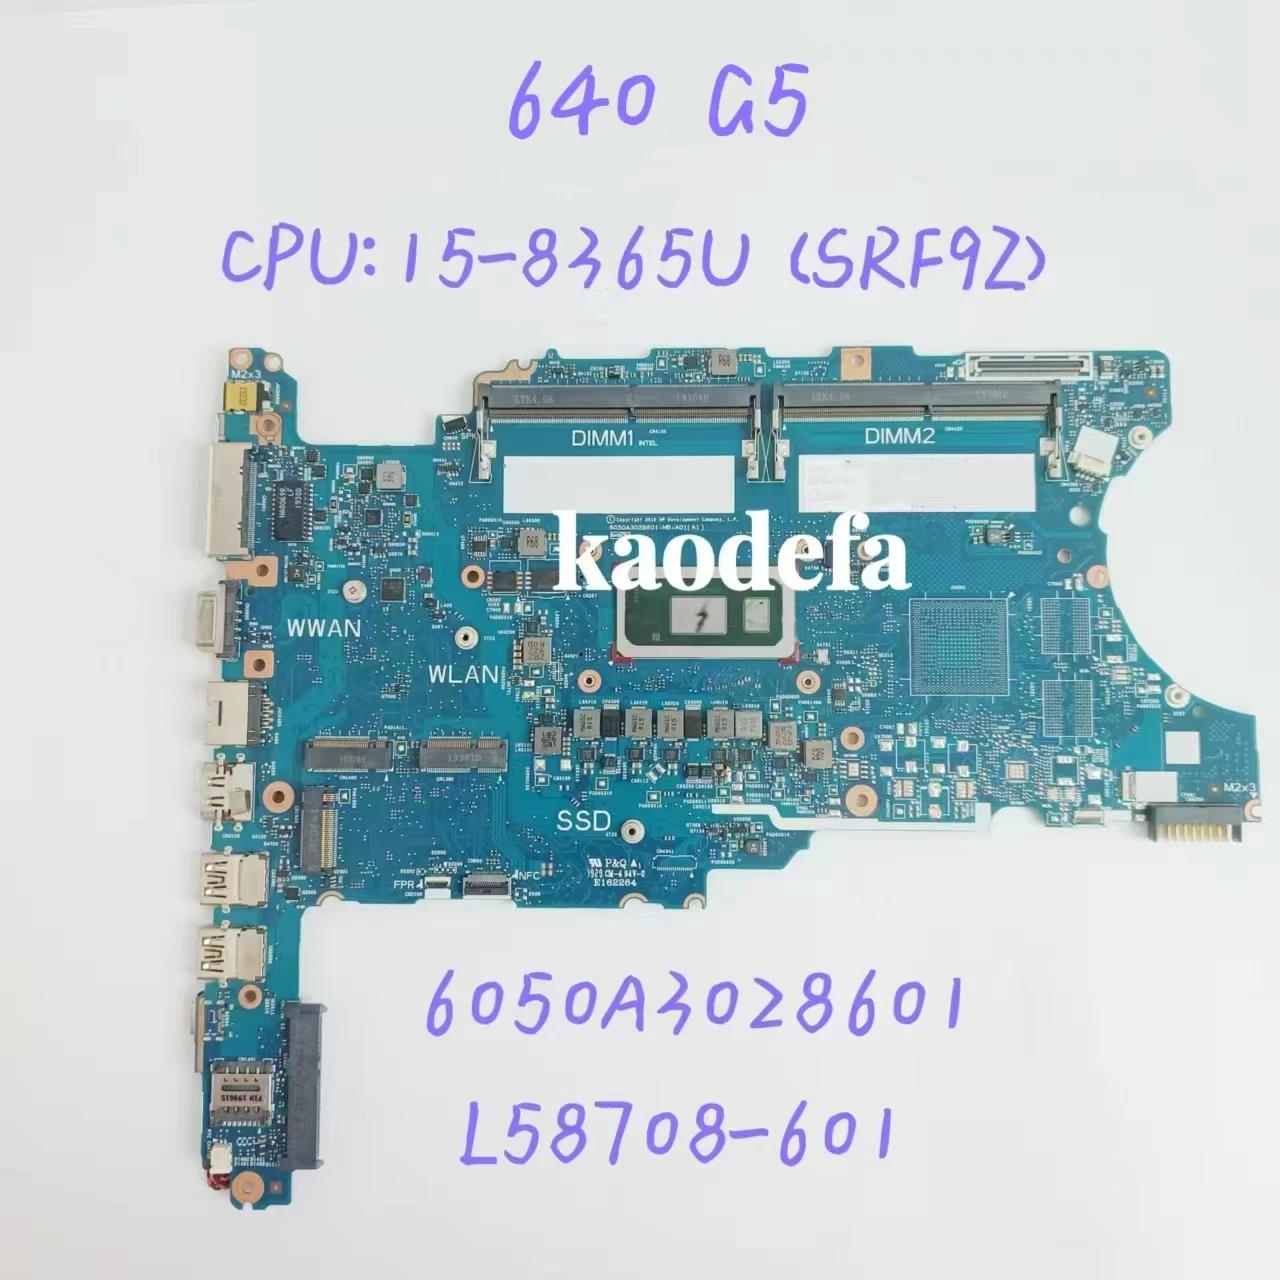 

6050A3028601 Mianboard For HP Probook 640 G5 Motherboard CPU: 15-8365U SRF9Z DDR4 L58708-601 L58708-601 L58708-601 Test OK